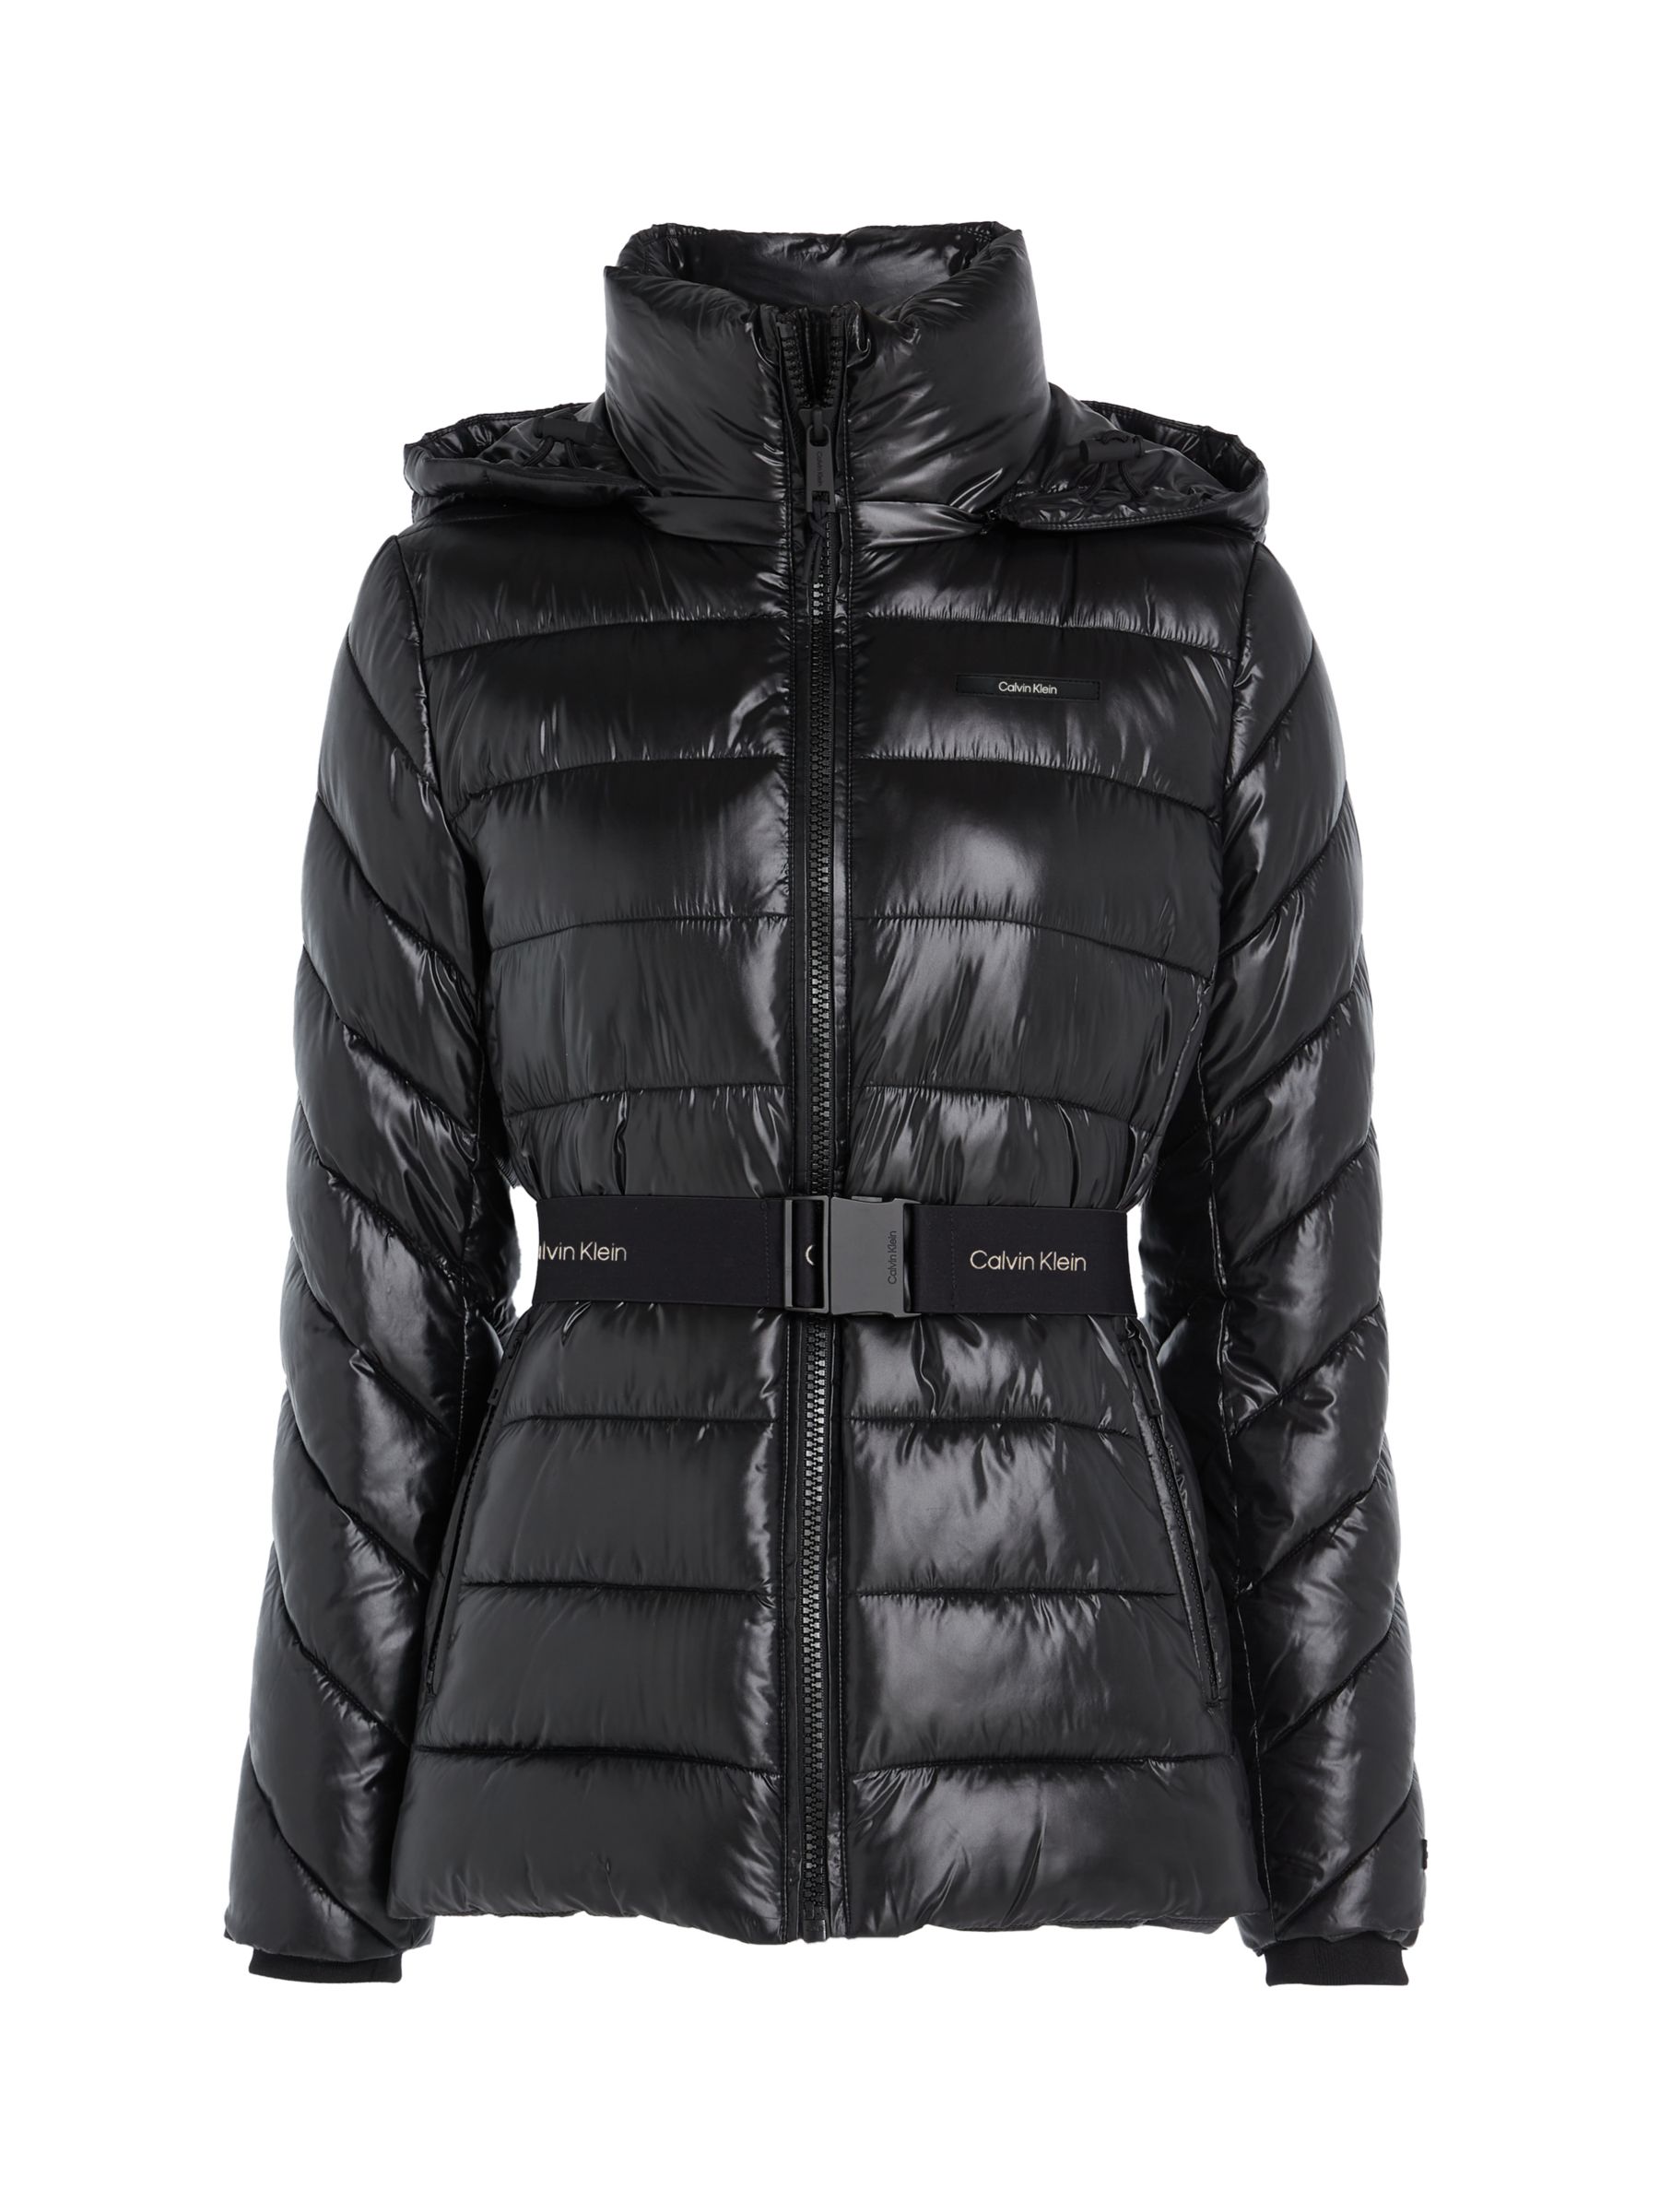 Calvin Klein Belted Padded Jacket, Ck Black at John Lewis & Partners